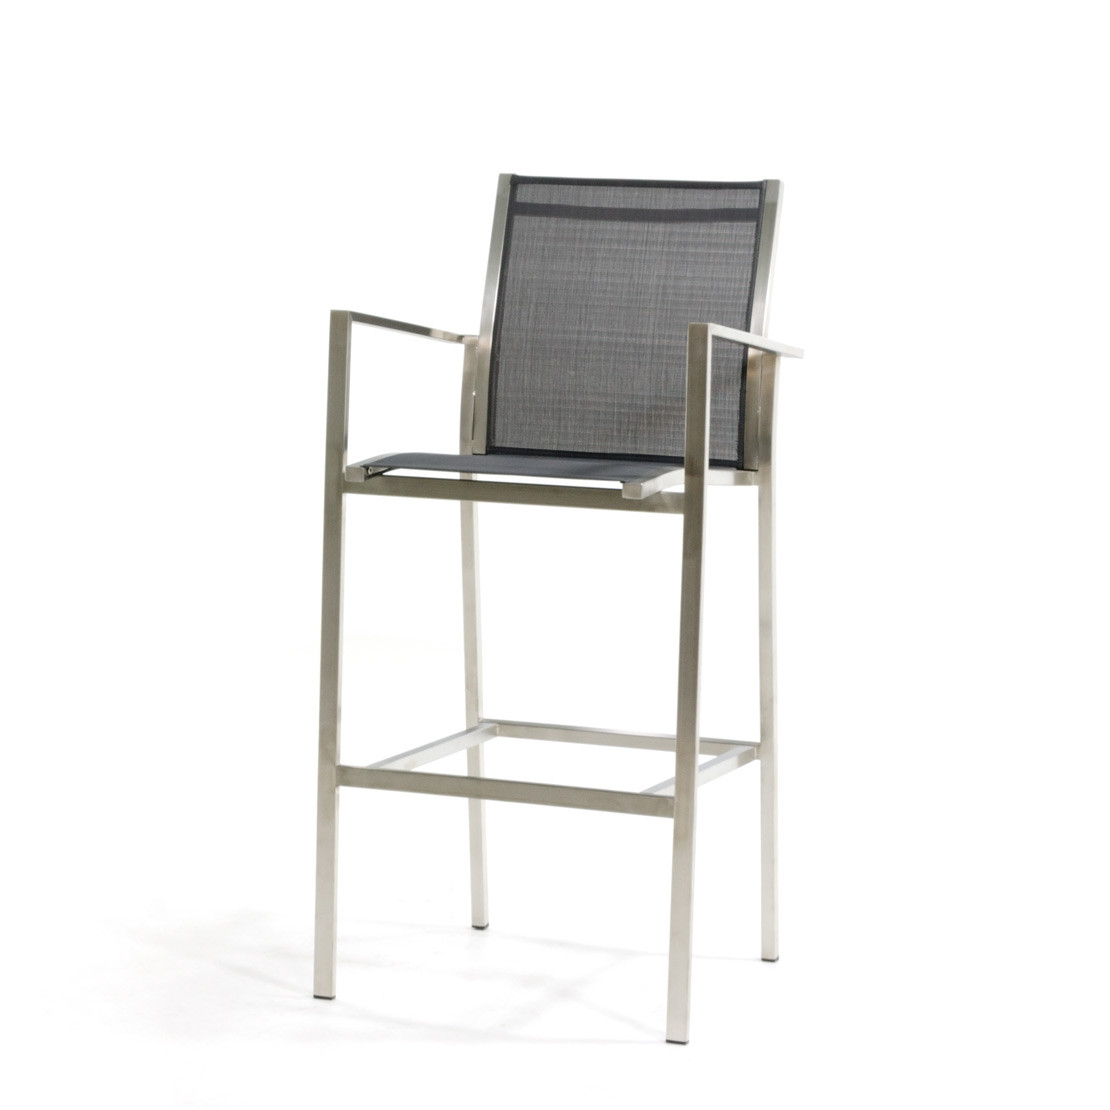 Falck RVS grey bar chair